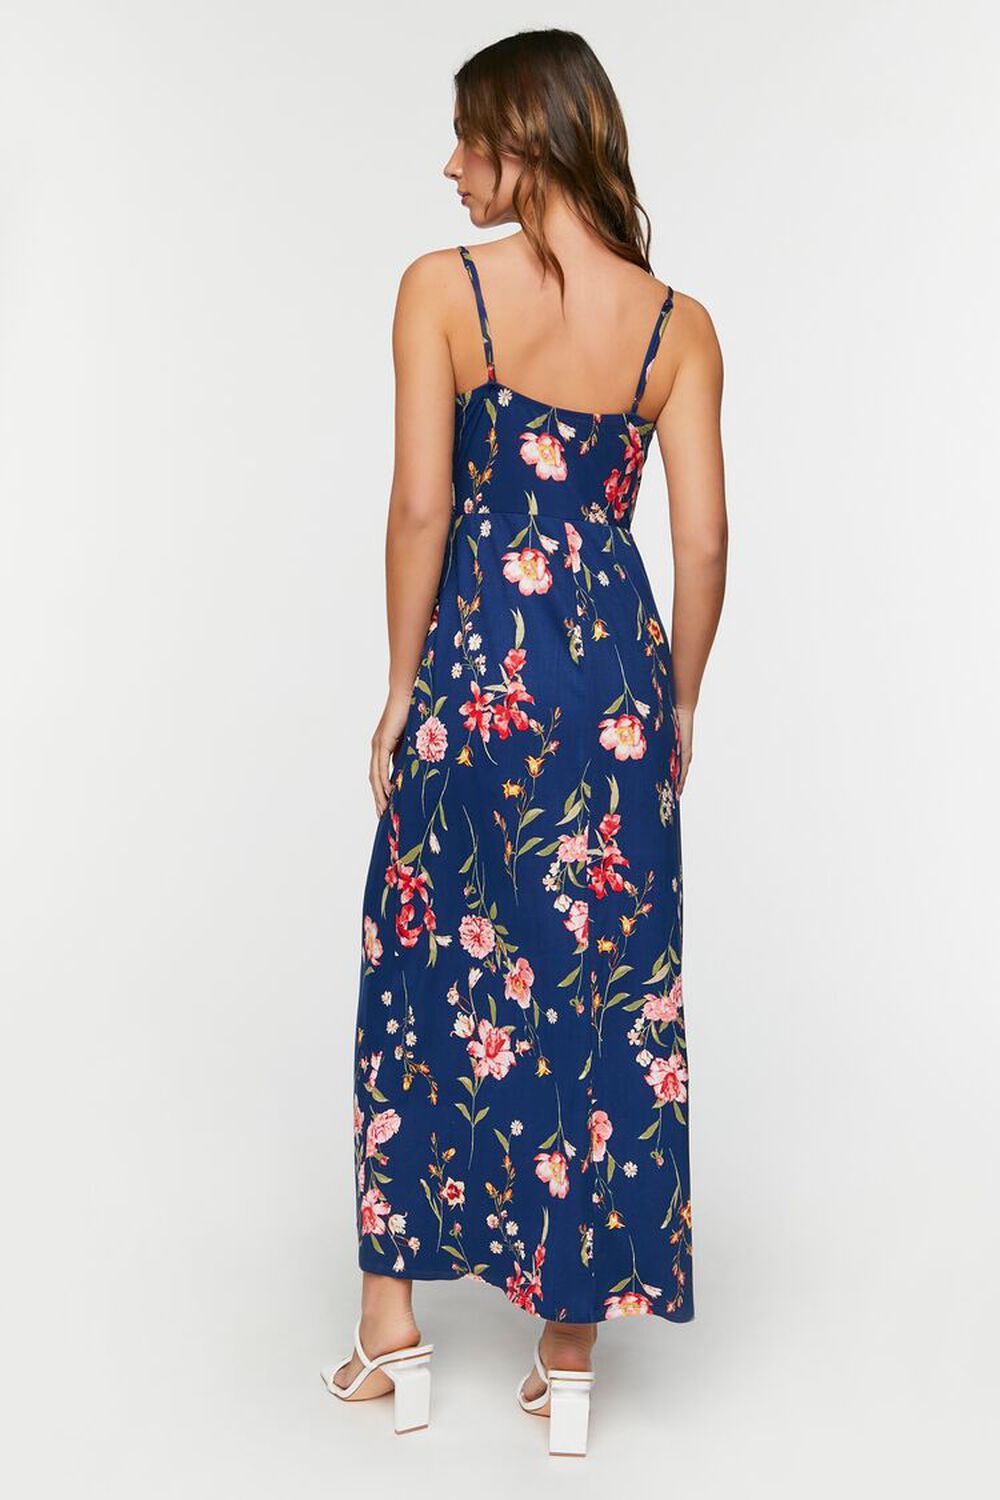 NAVY/MULTI Floral Print Cami Maxi Dress, image 3